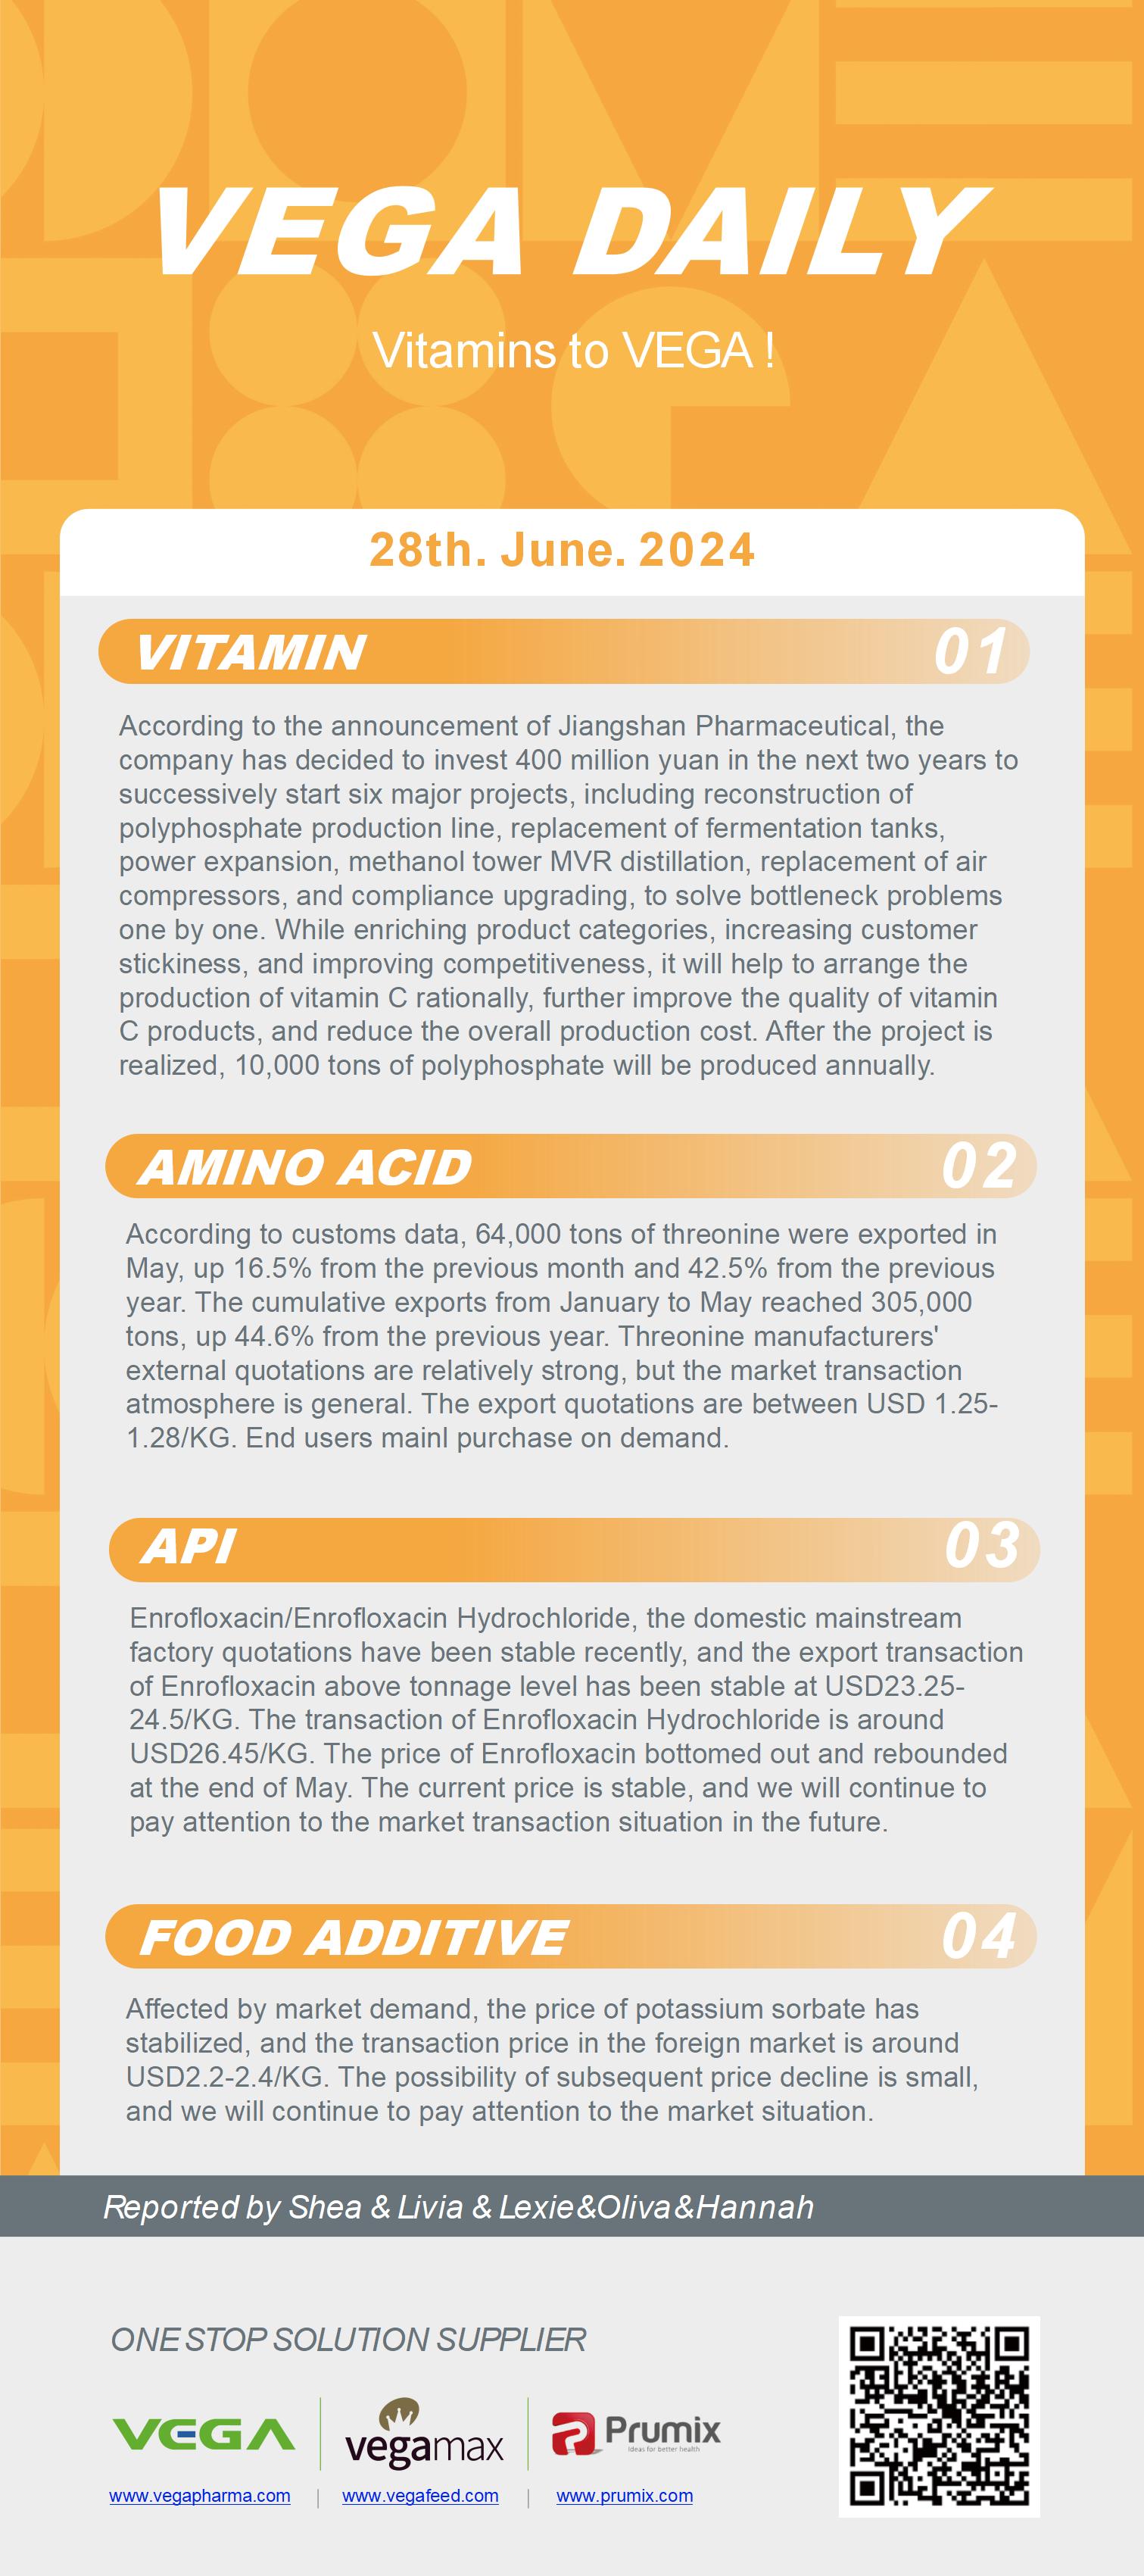 Vega Daily Dated on Jun 28th 2024 Vitamin Amino Acid APl Food Additives.jpg